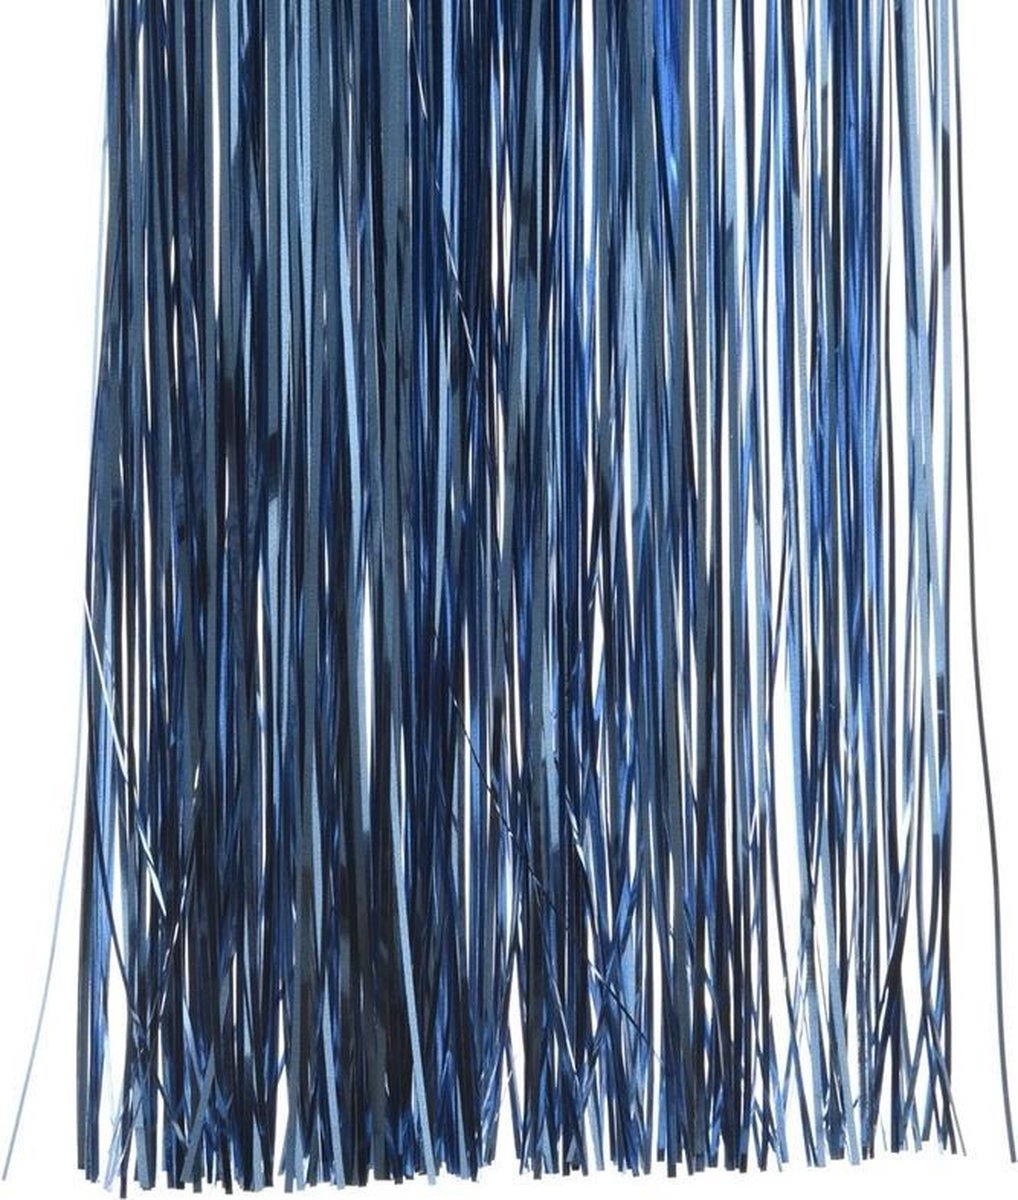 3x Blauwe kerstversiering folie slierten 50 cm